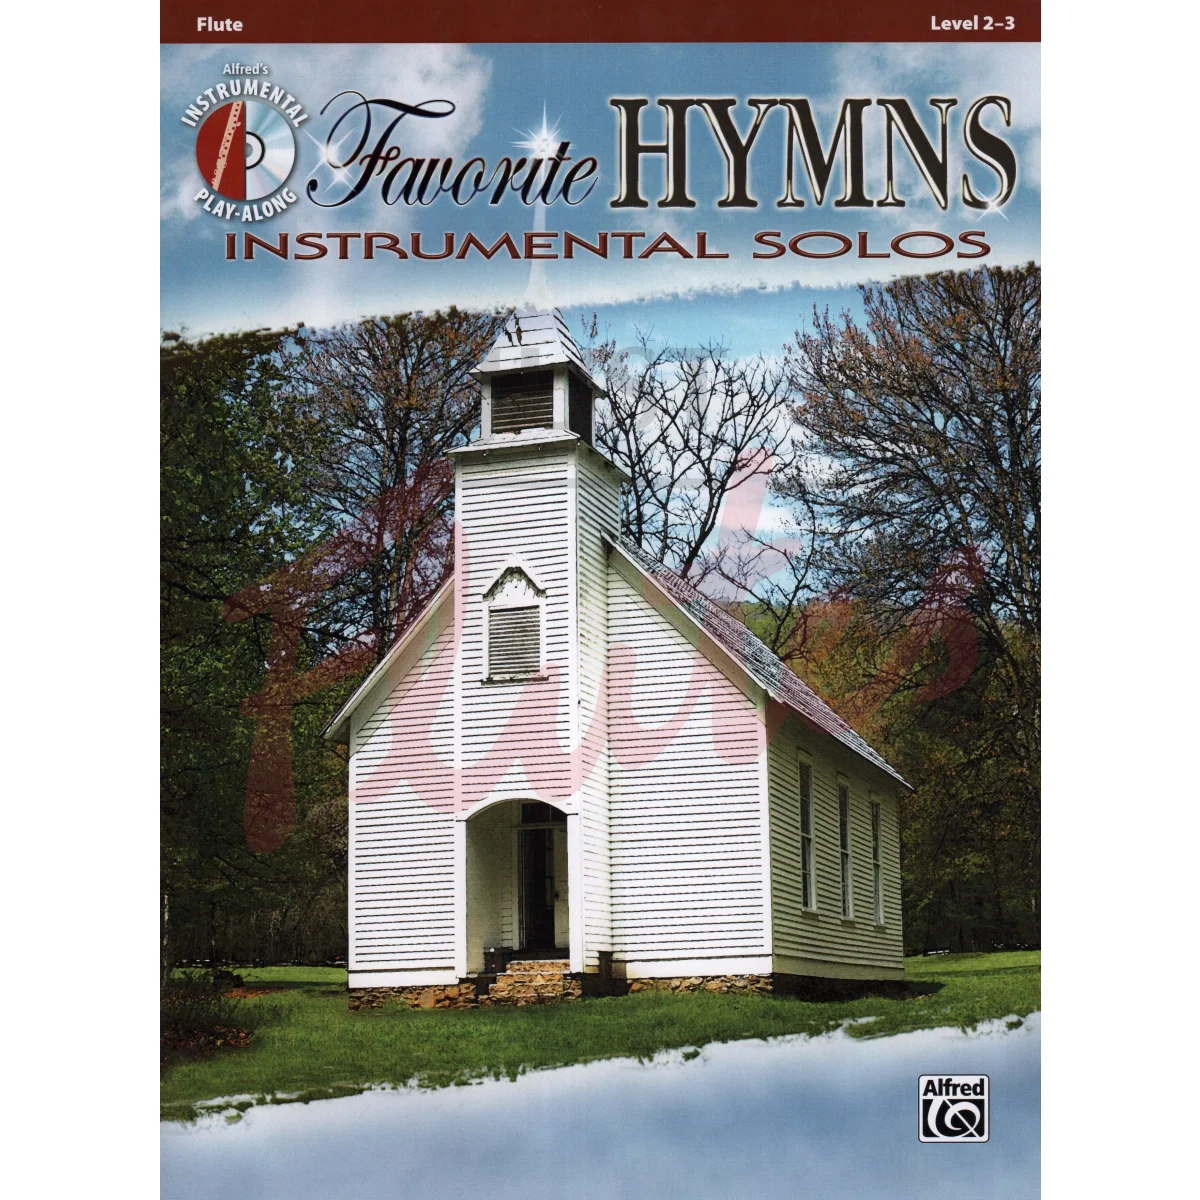 Favorite Hymns Instrumental Solos for Flute